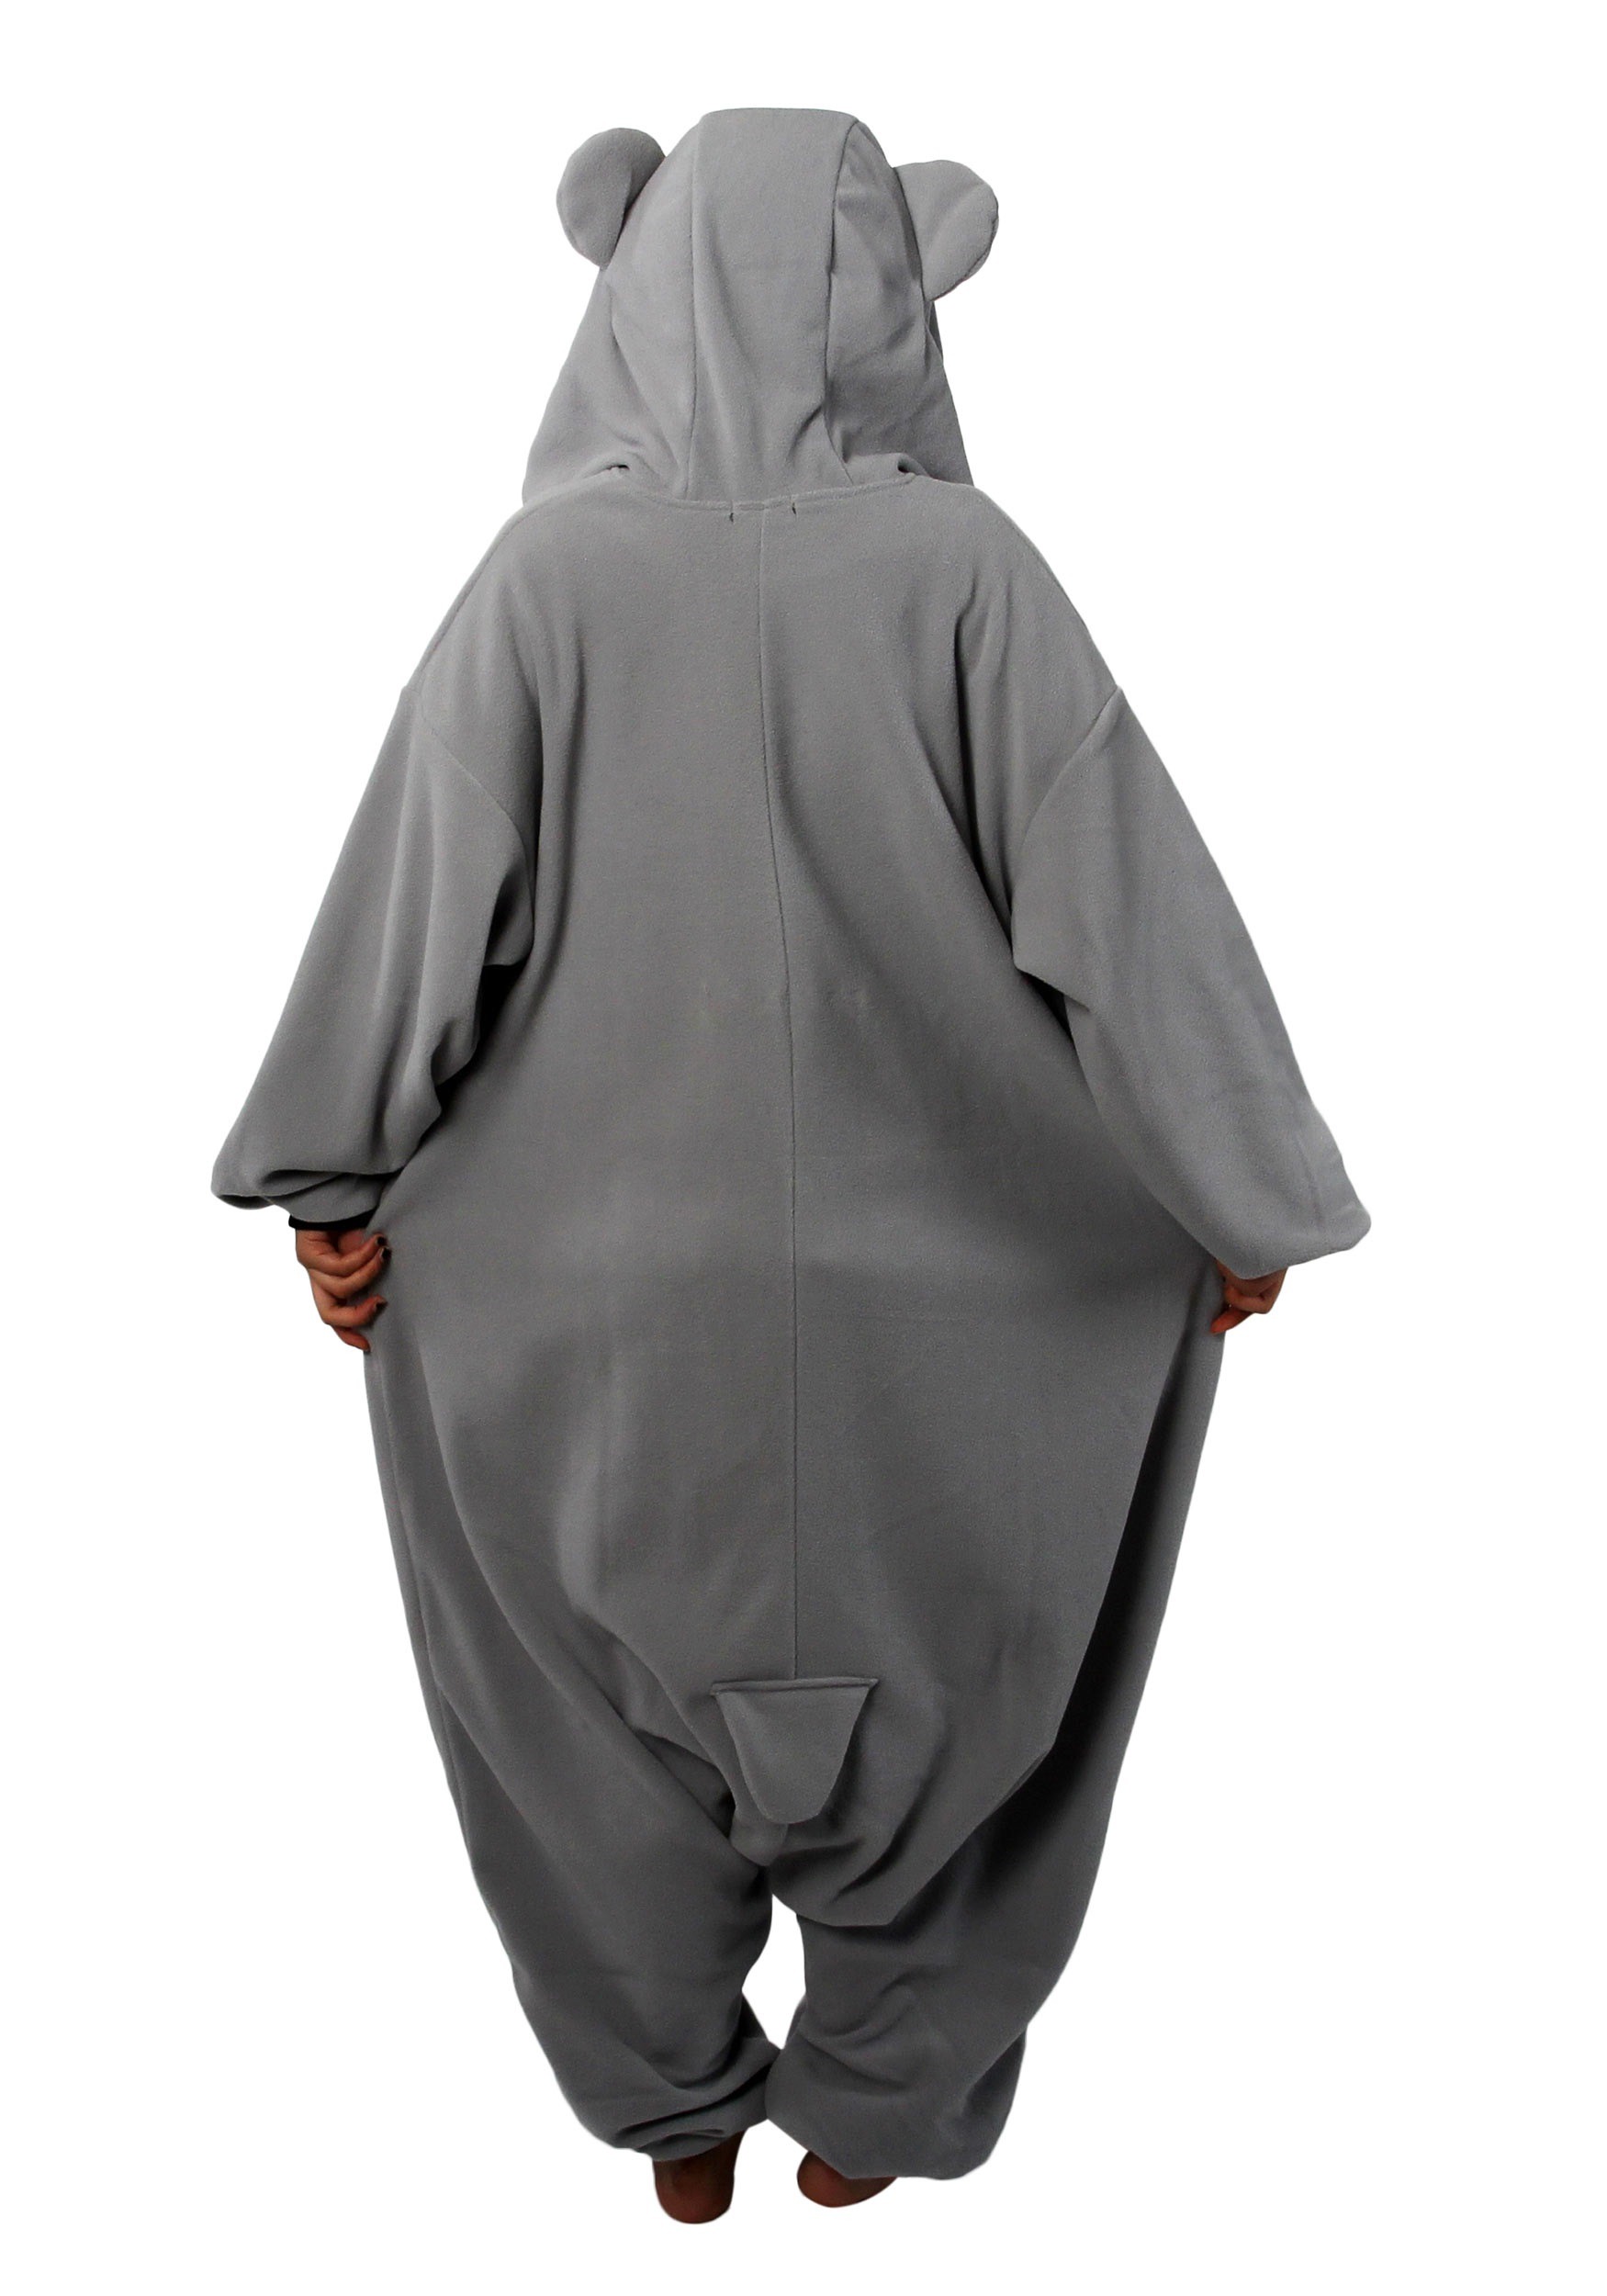 Grey Koala Kigurumi Costume